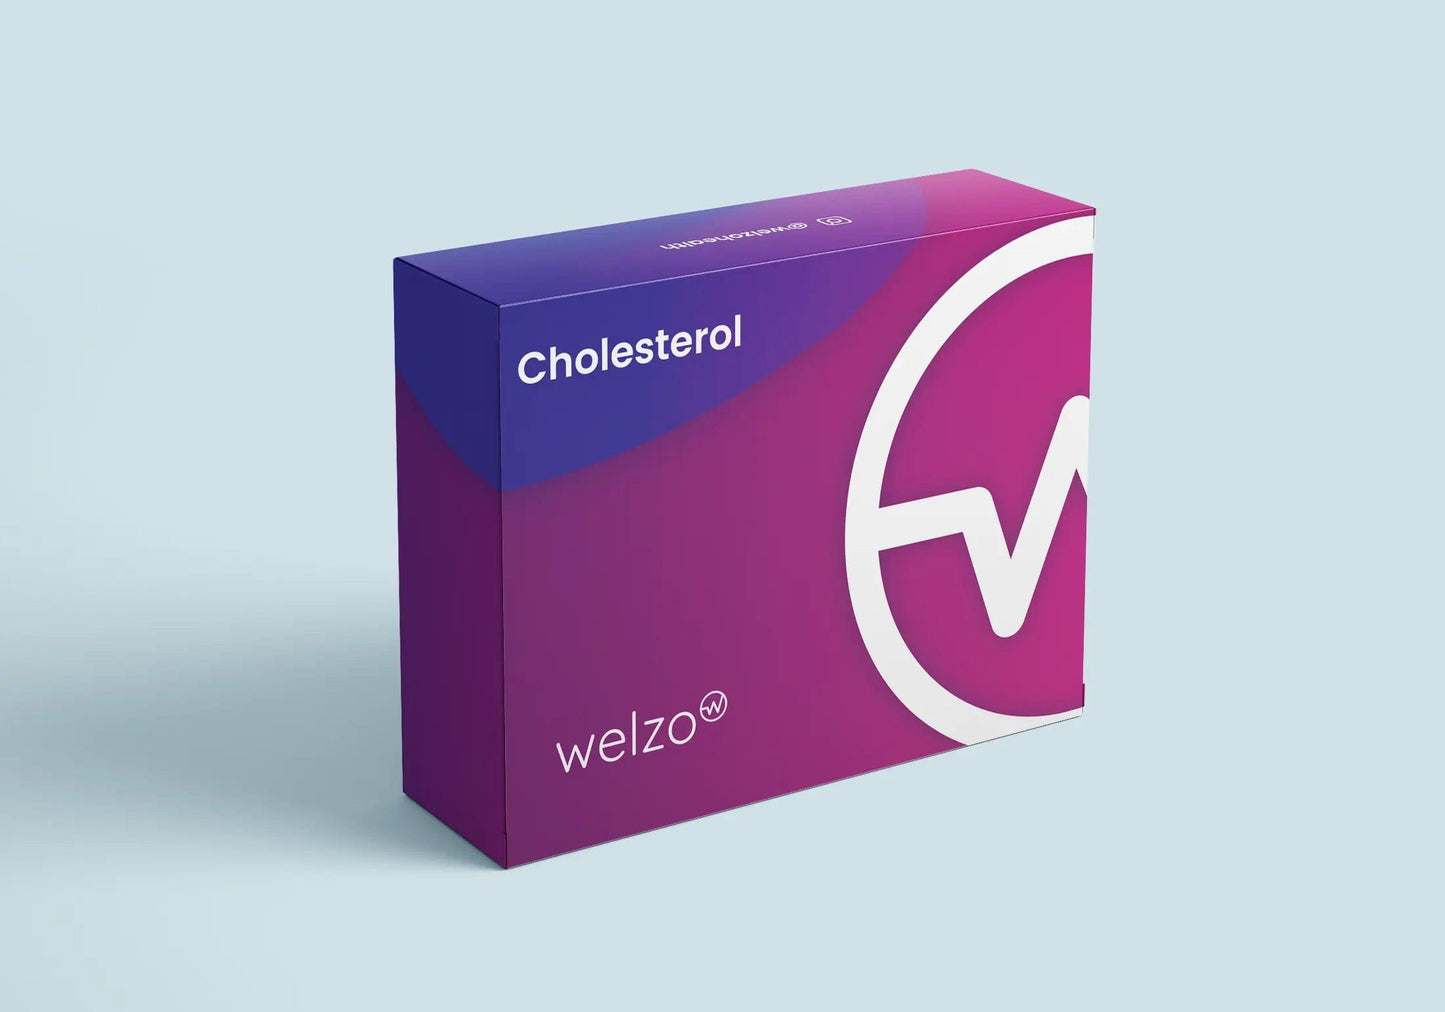 Cholesterol Blood Test